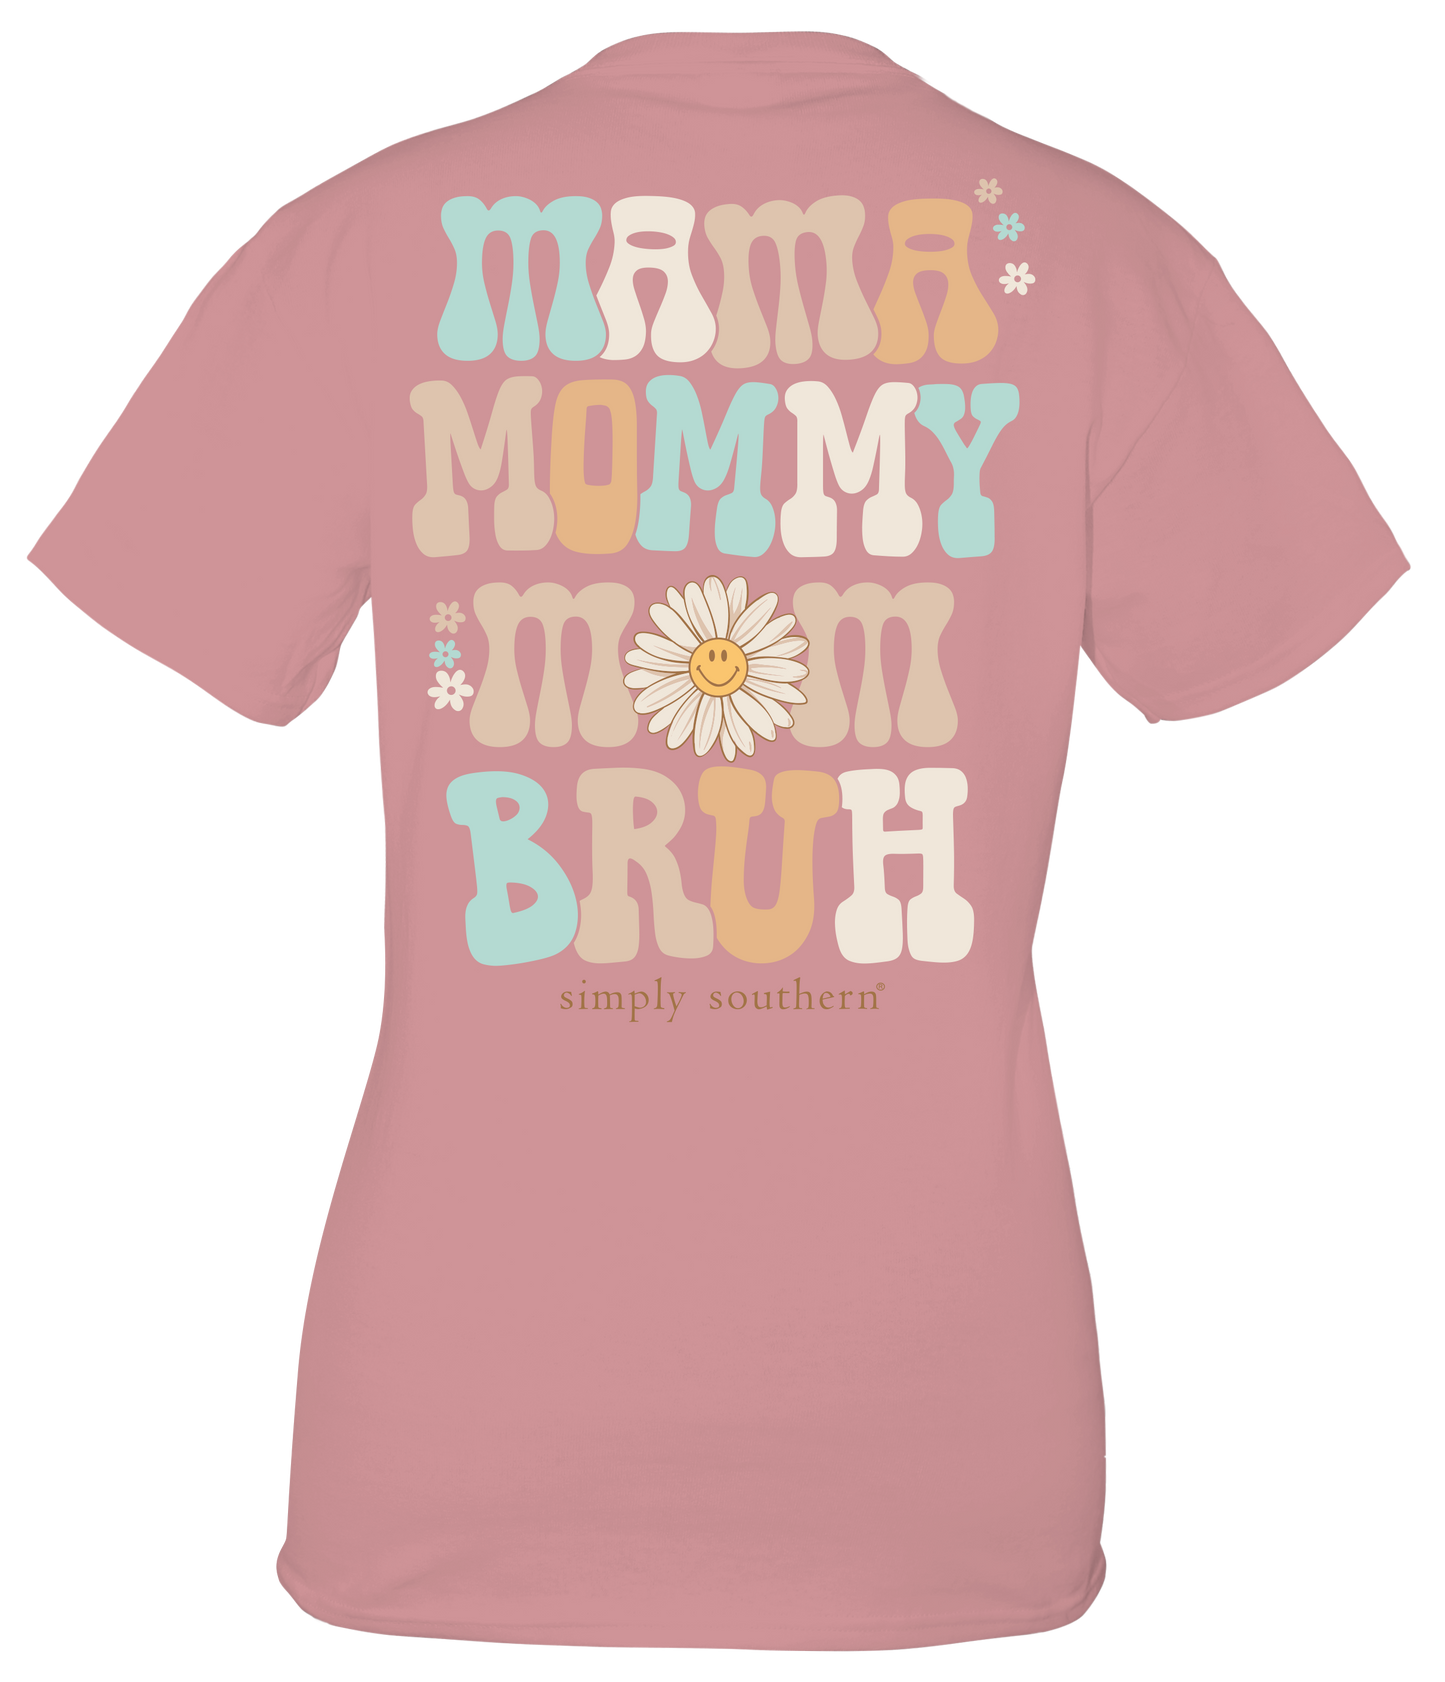 "Mama, Mommy, Mom, Bruh" Shirt